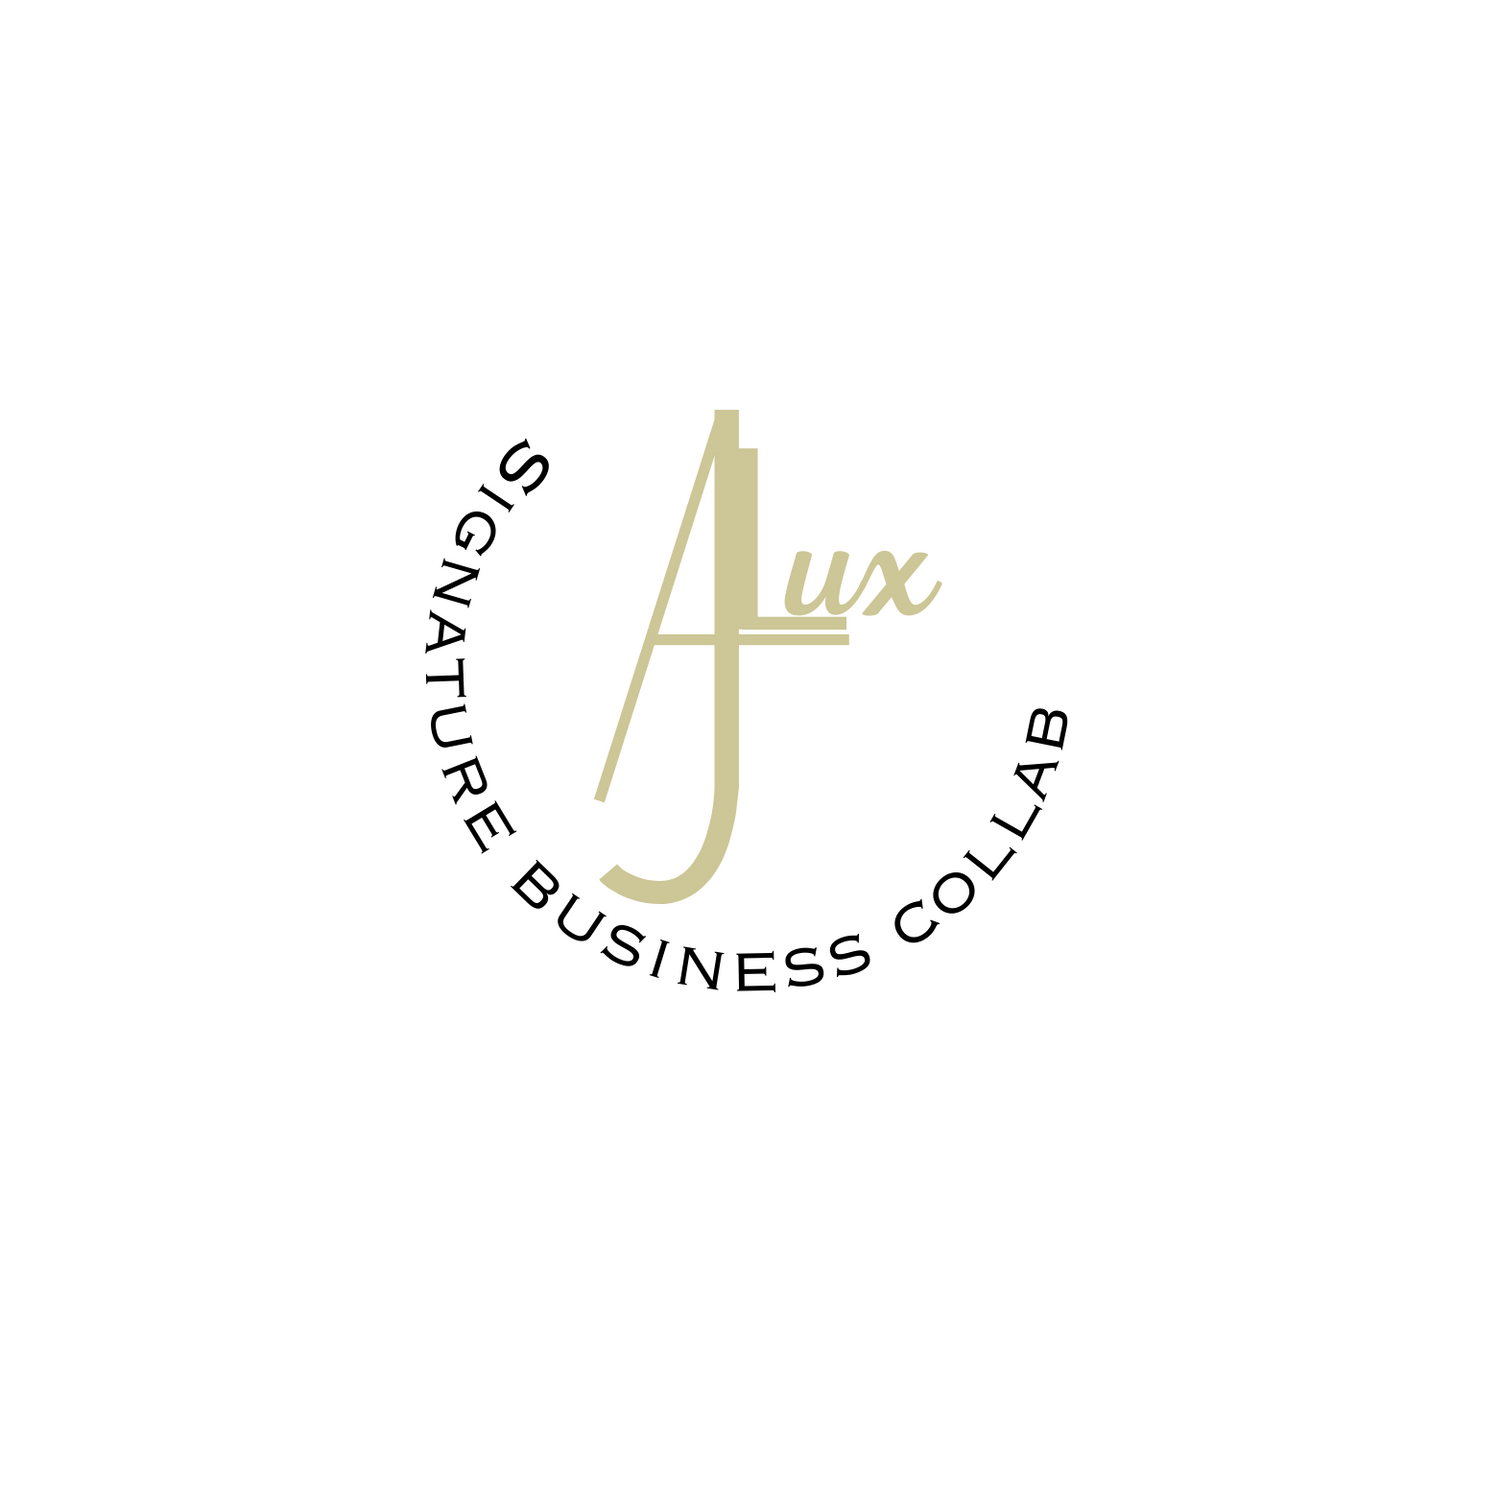 Lux Signature Business Collab